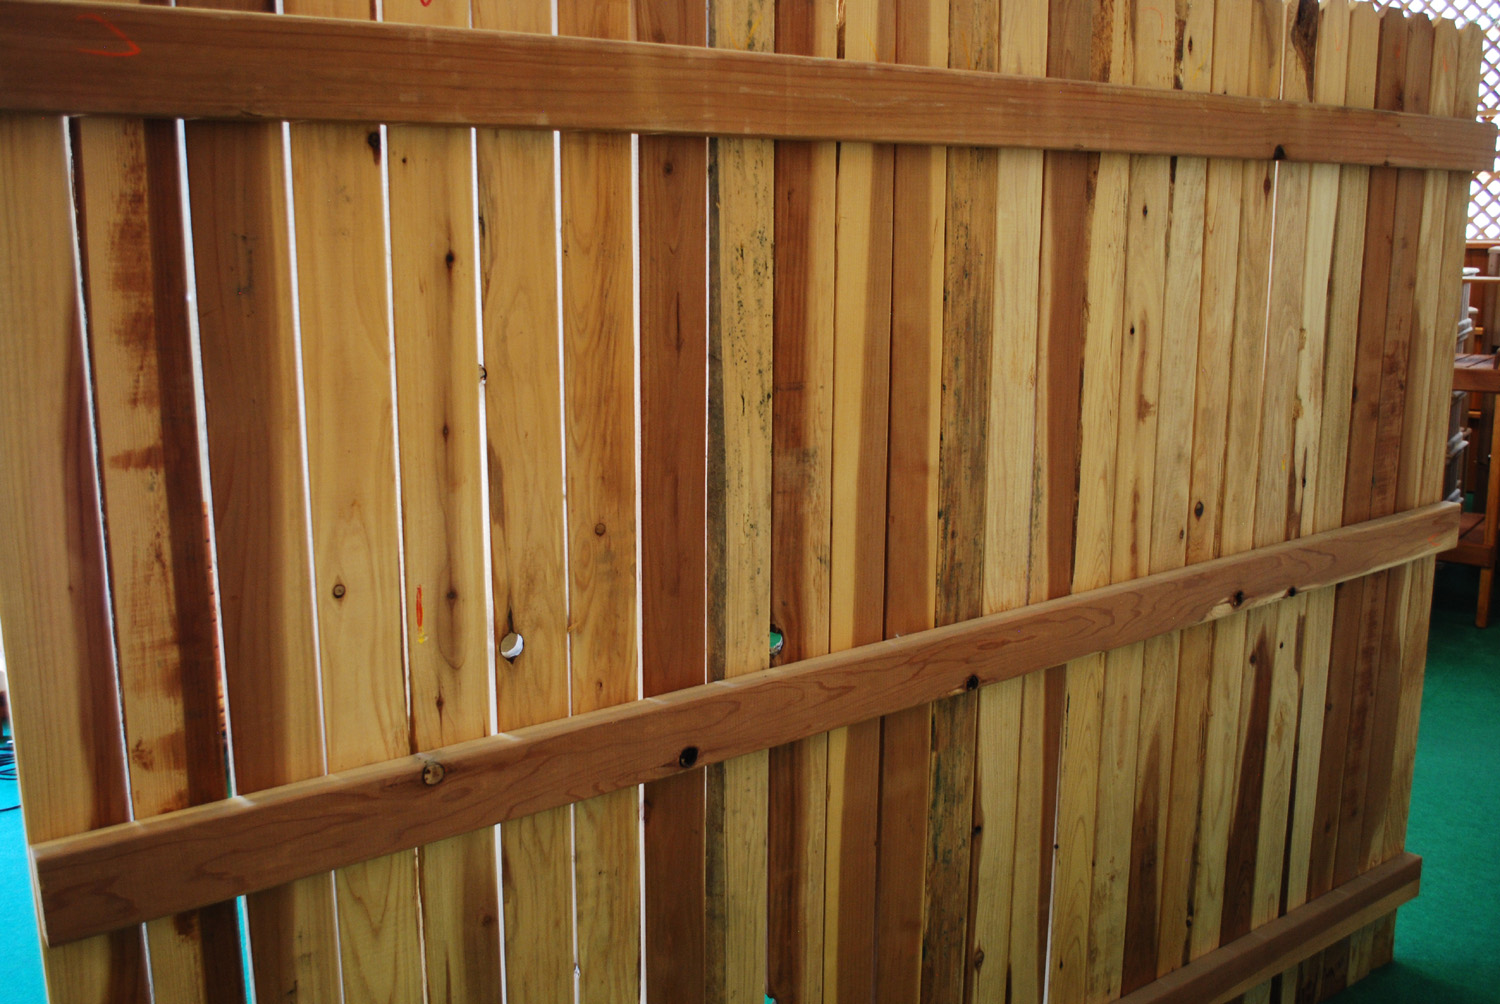 1" x 4" redwood fence panel